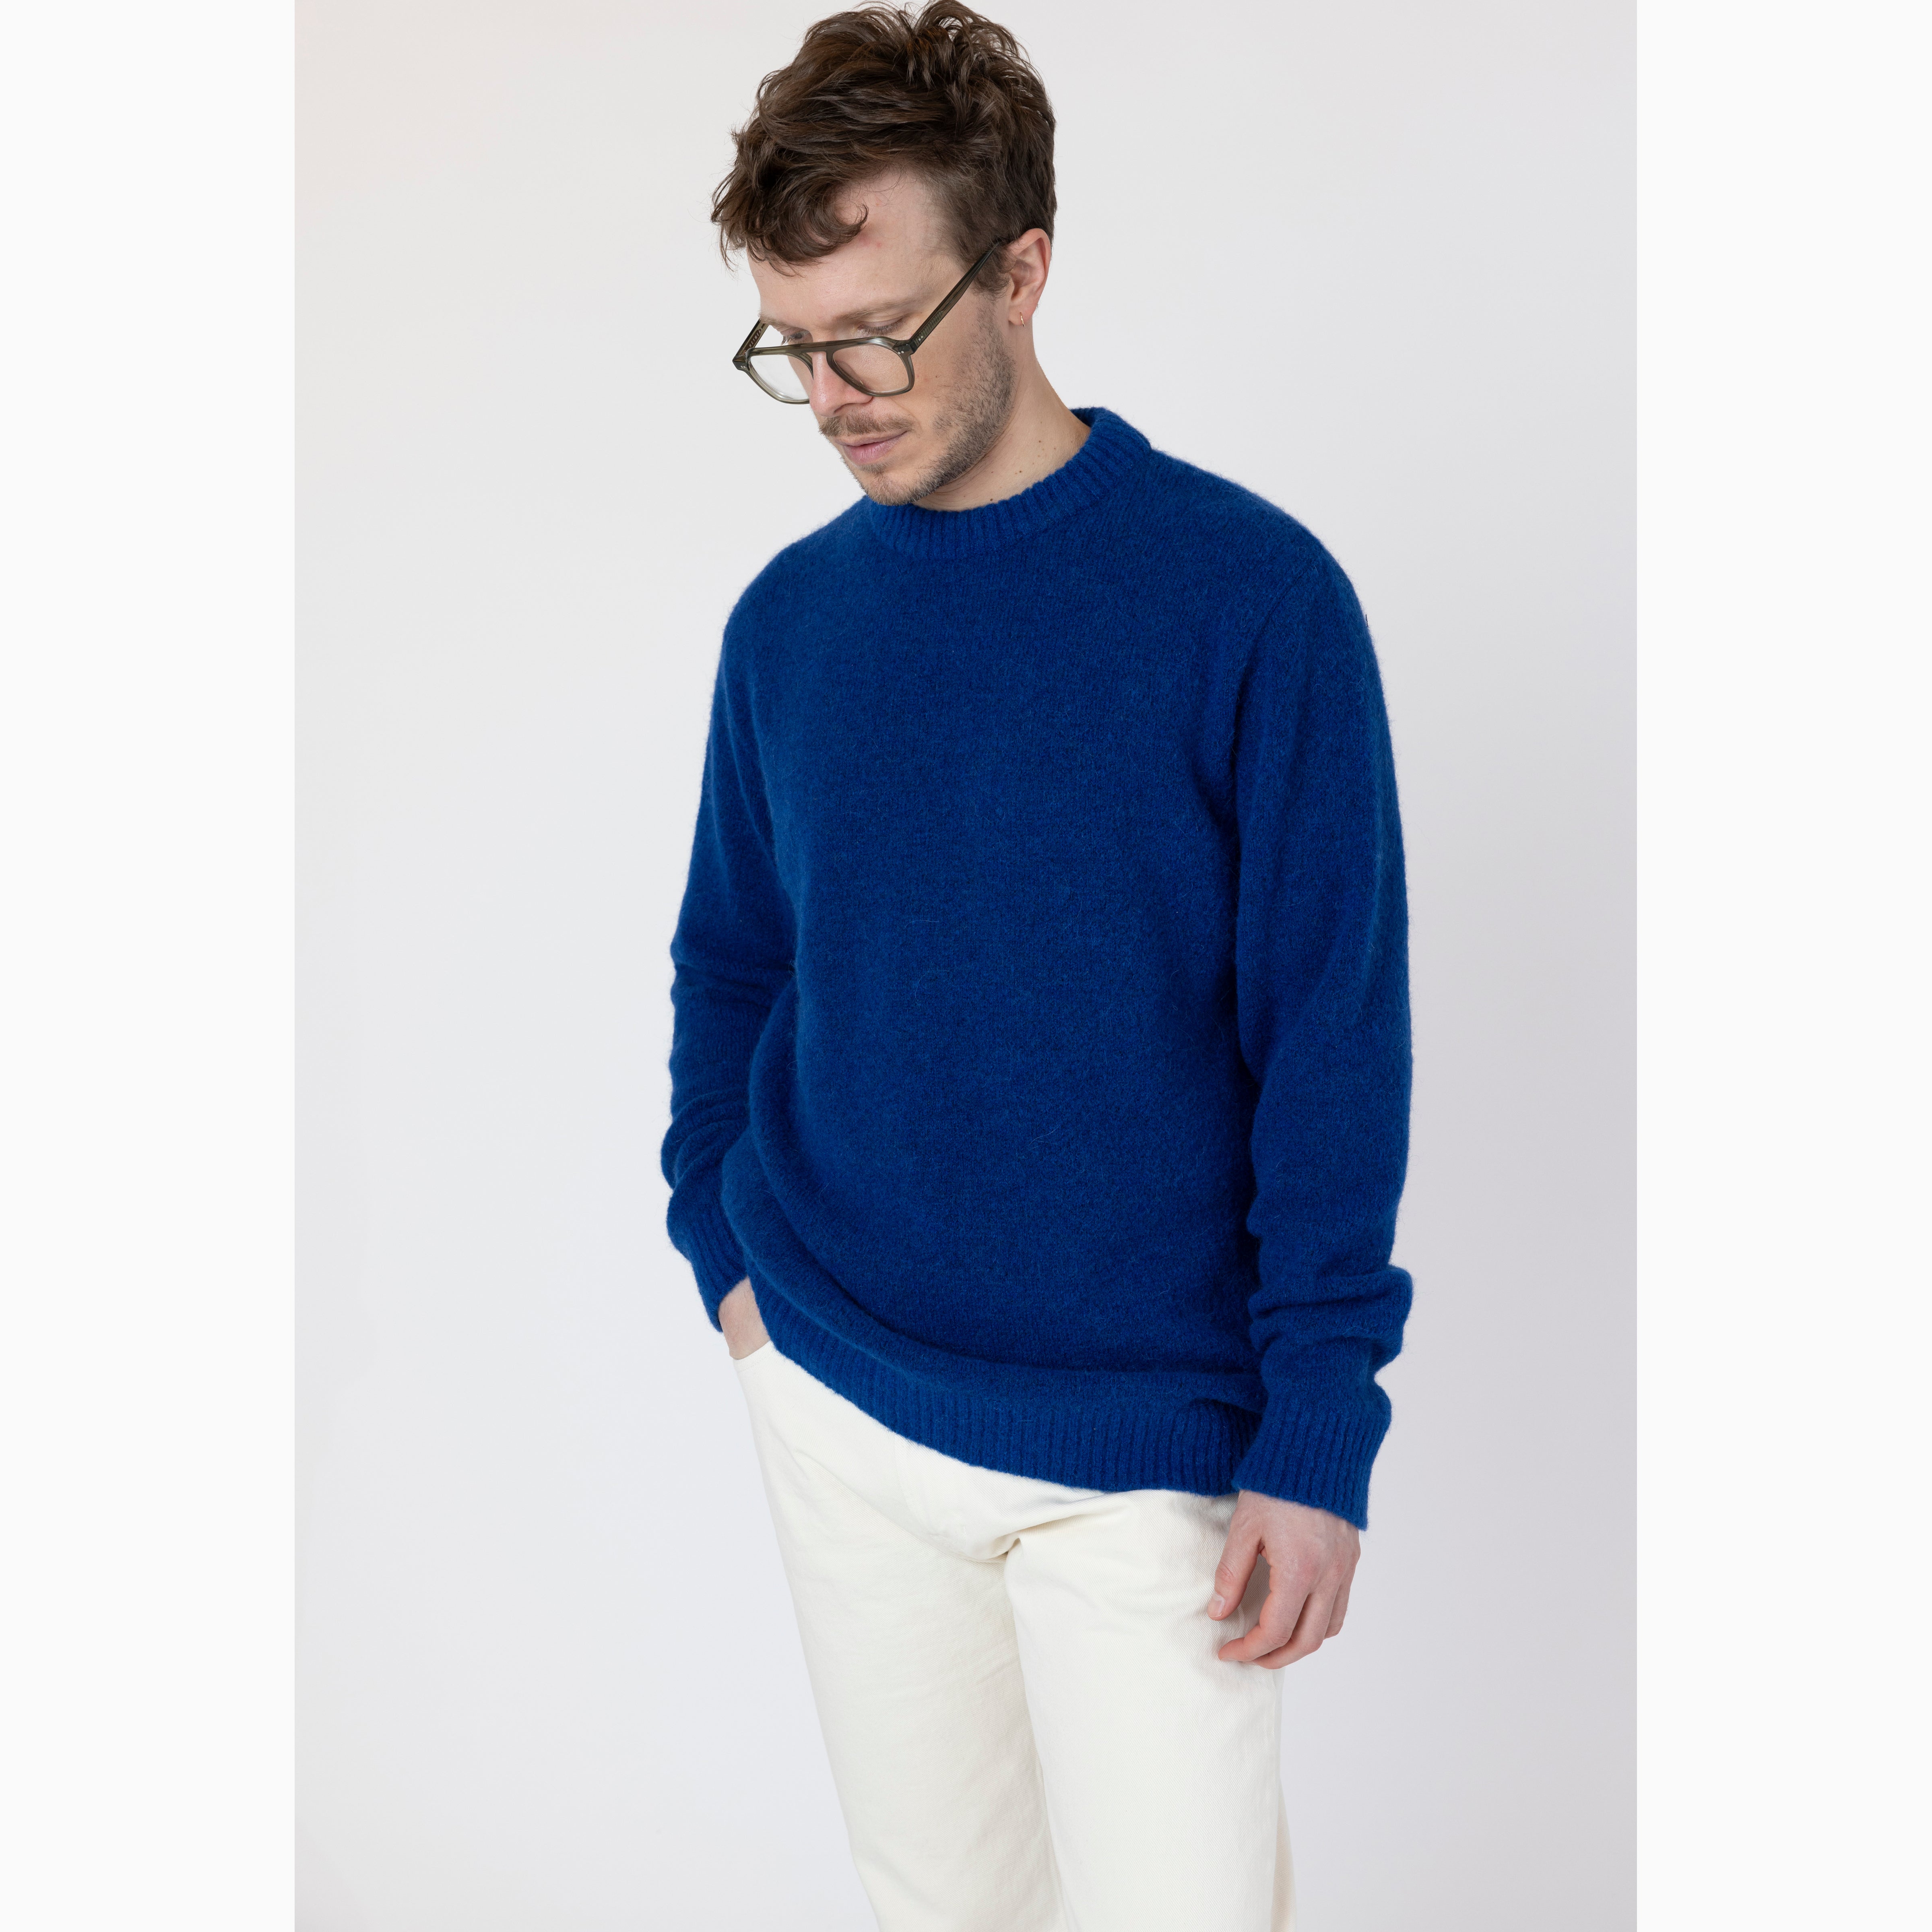 Foret Alpine Long Sleeve Knit Sweater Blue